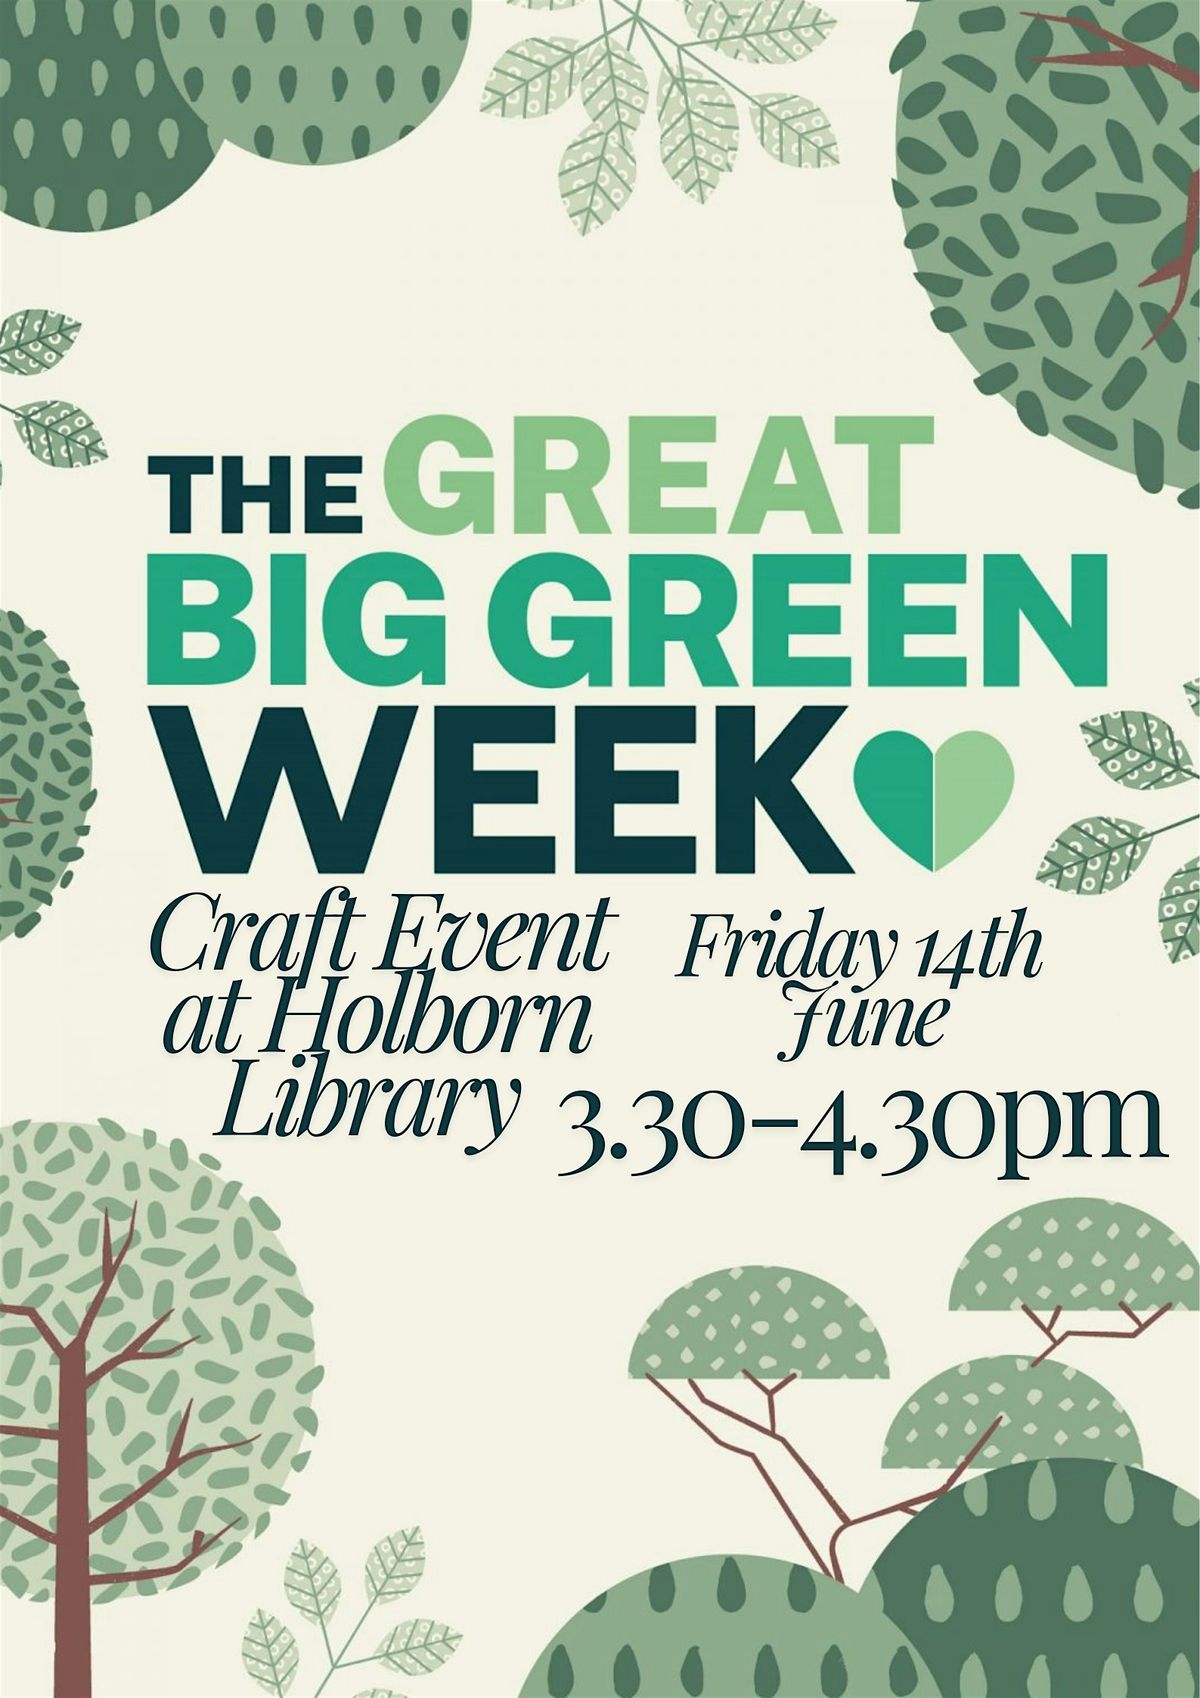 The Grat Big Green Week